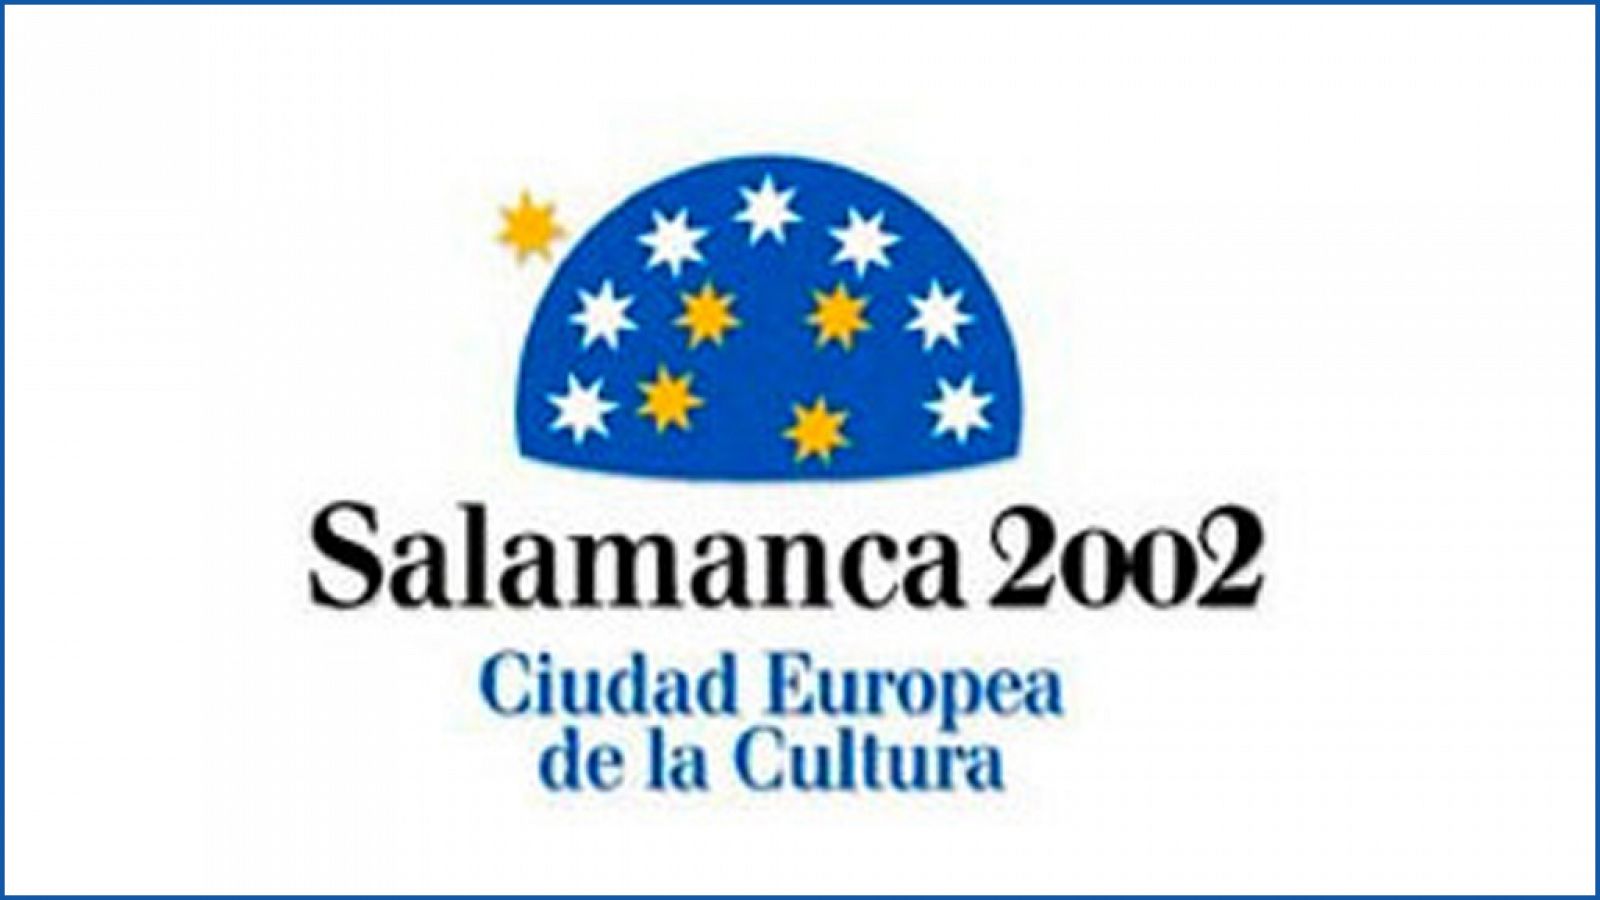 Salamanca 2002 - Ciudad Europea de la Cultura.